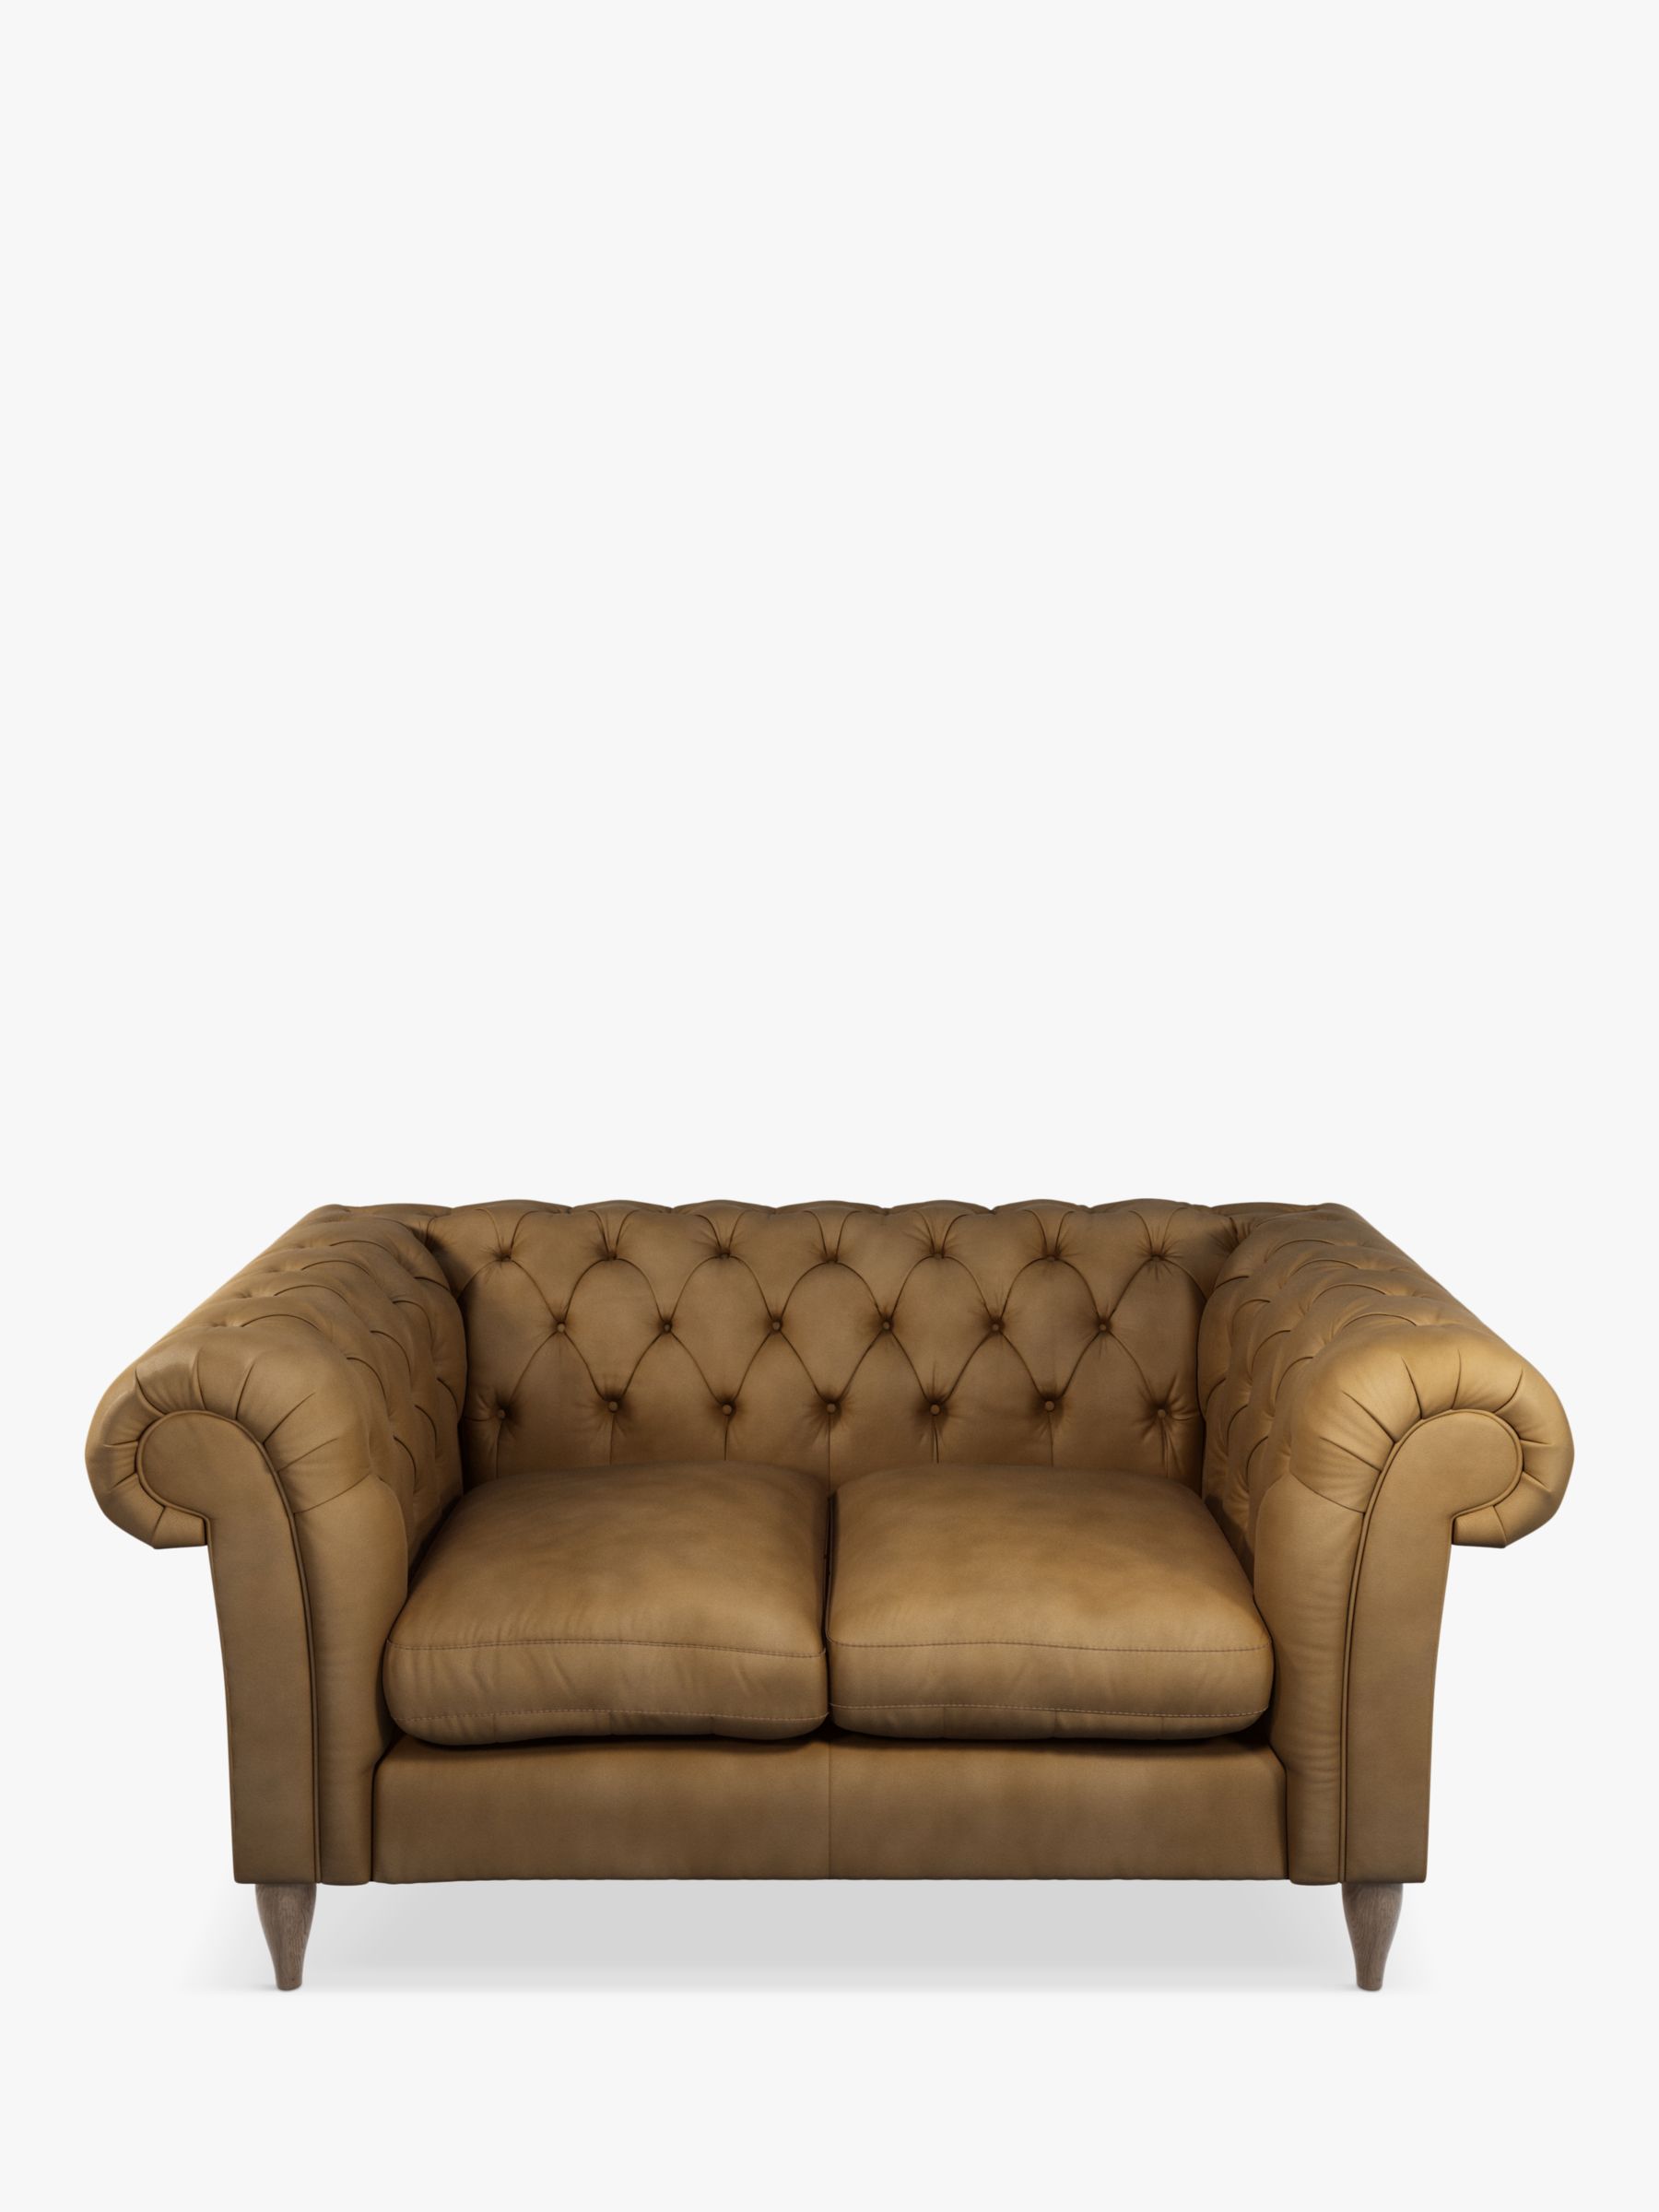 Cromwell Range, John Lewis Cromwell Chesterfield Small 2 Seater Leather Sofa, Light Leg, Demetra Light Tan